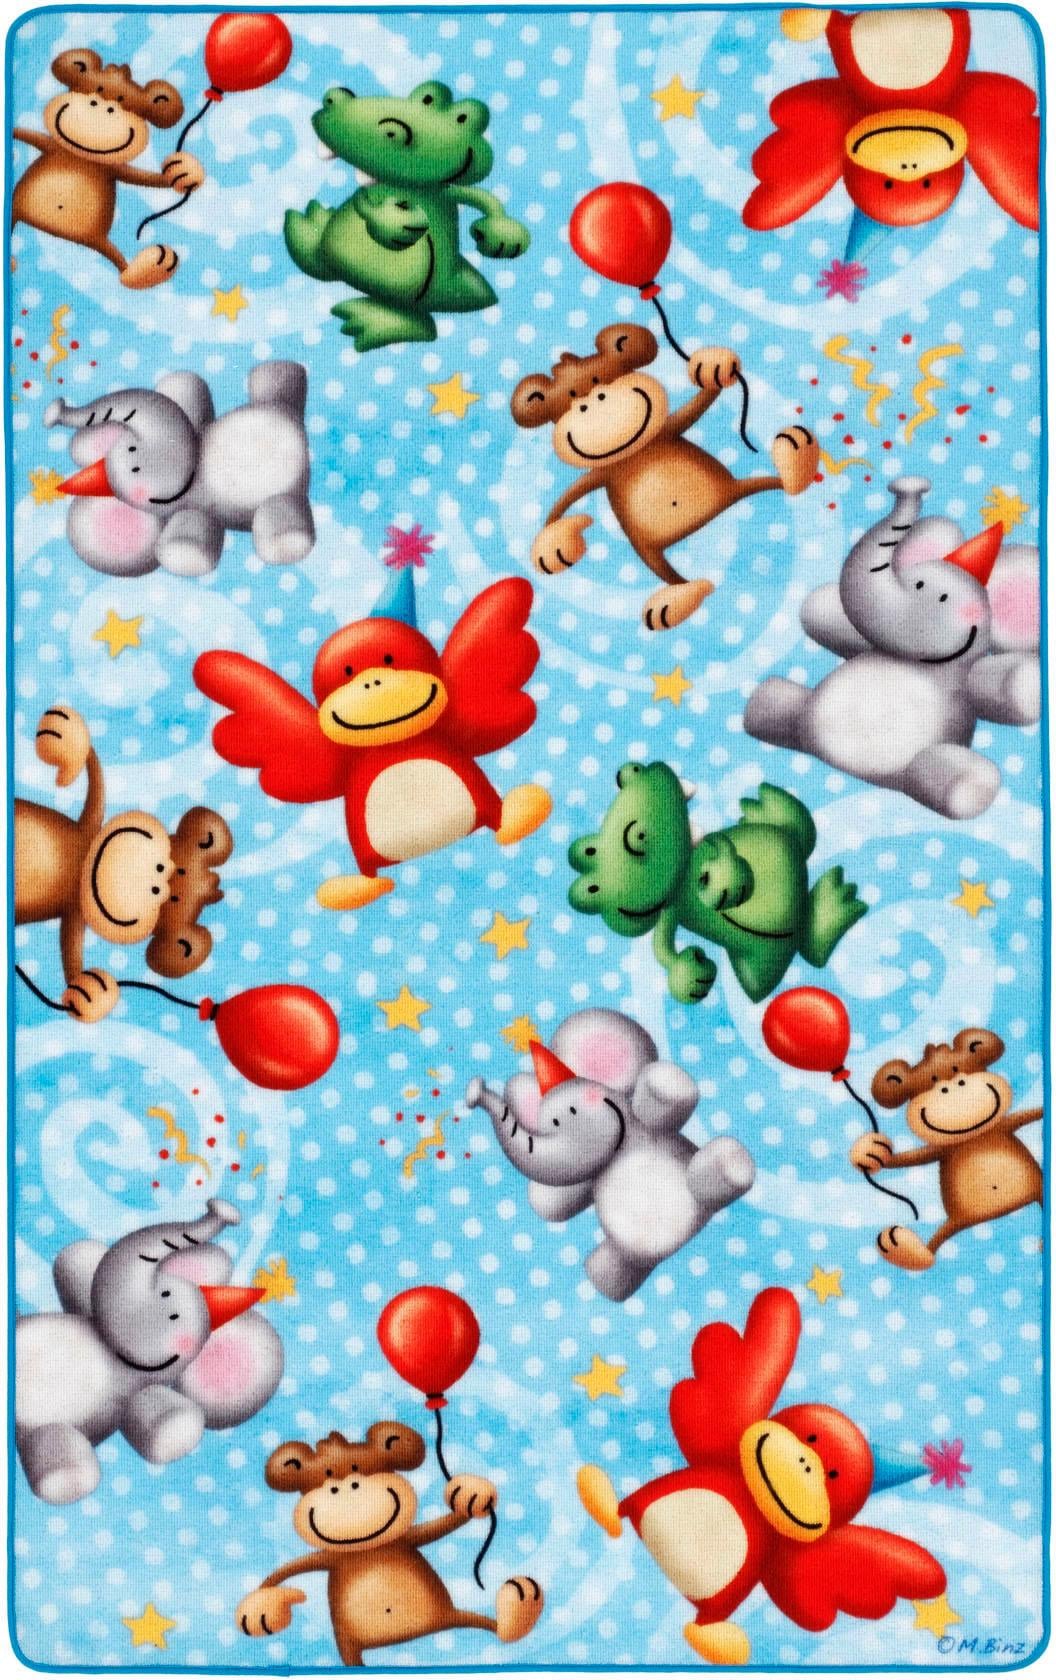 Böing Carpet Fußmatte »Lovely Kids LK-4«, rechteckig, Schmutzfangmatte, Motiv Zootiere, Kinderzimmer